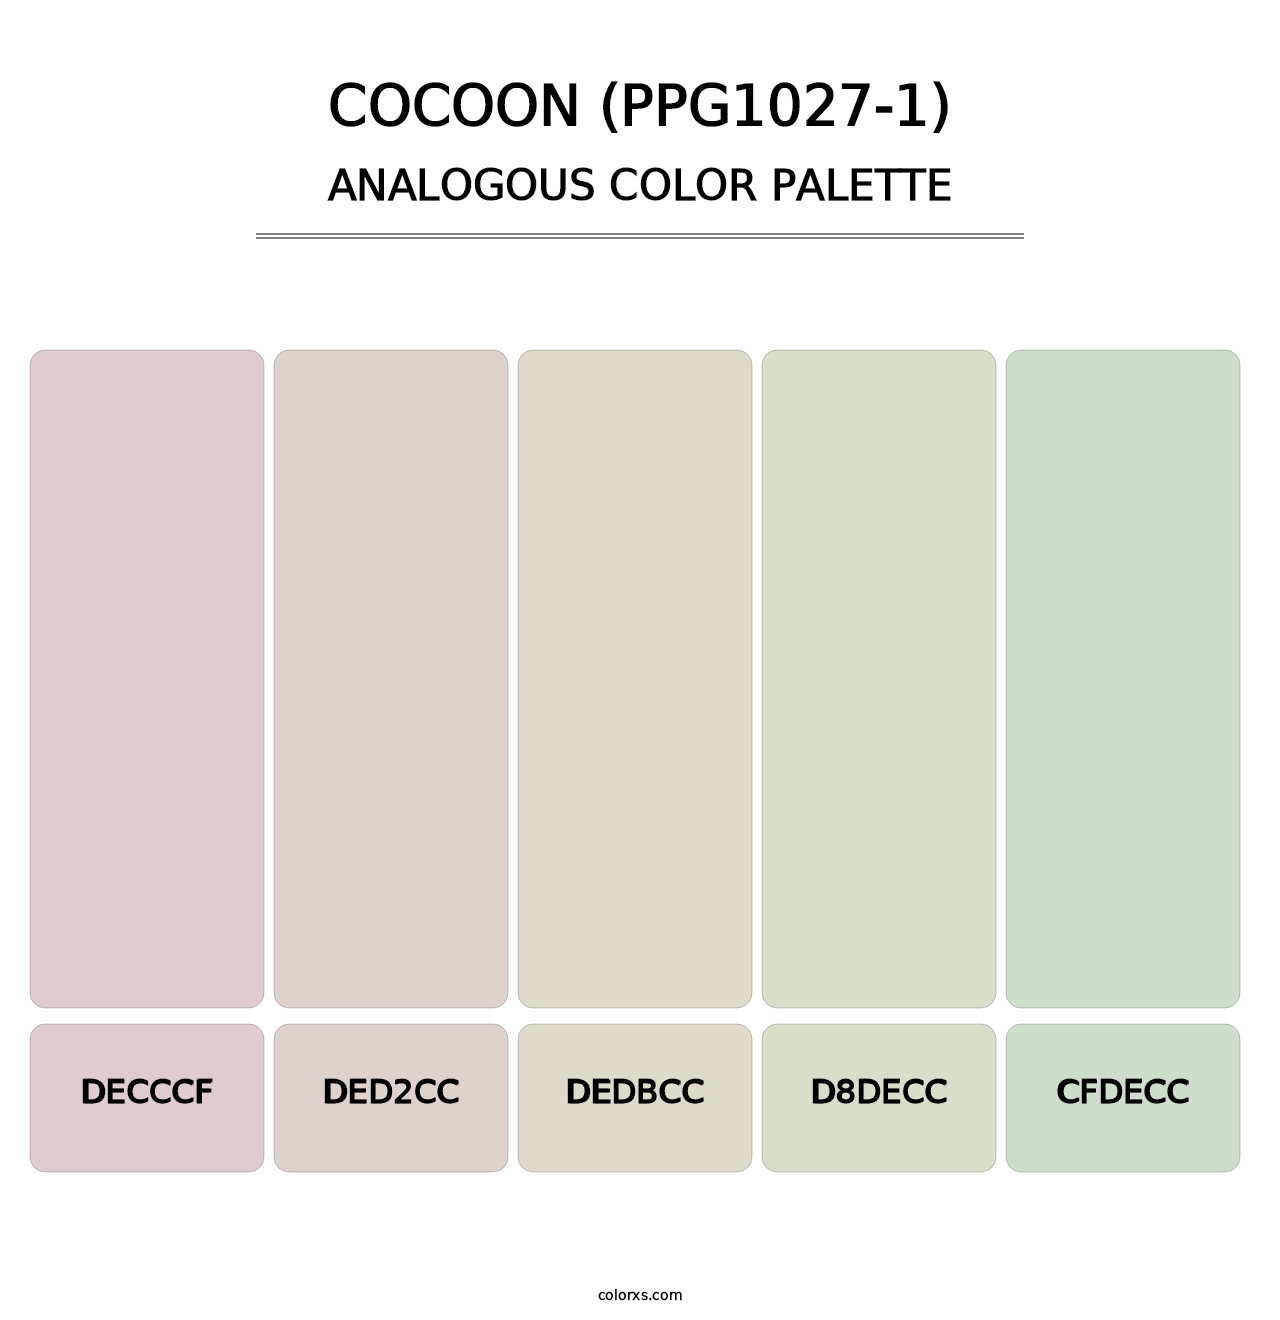 Cocoon (PPG1027-1) - Analogous Color Palette